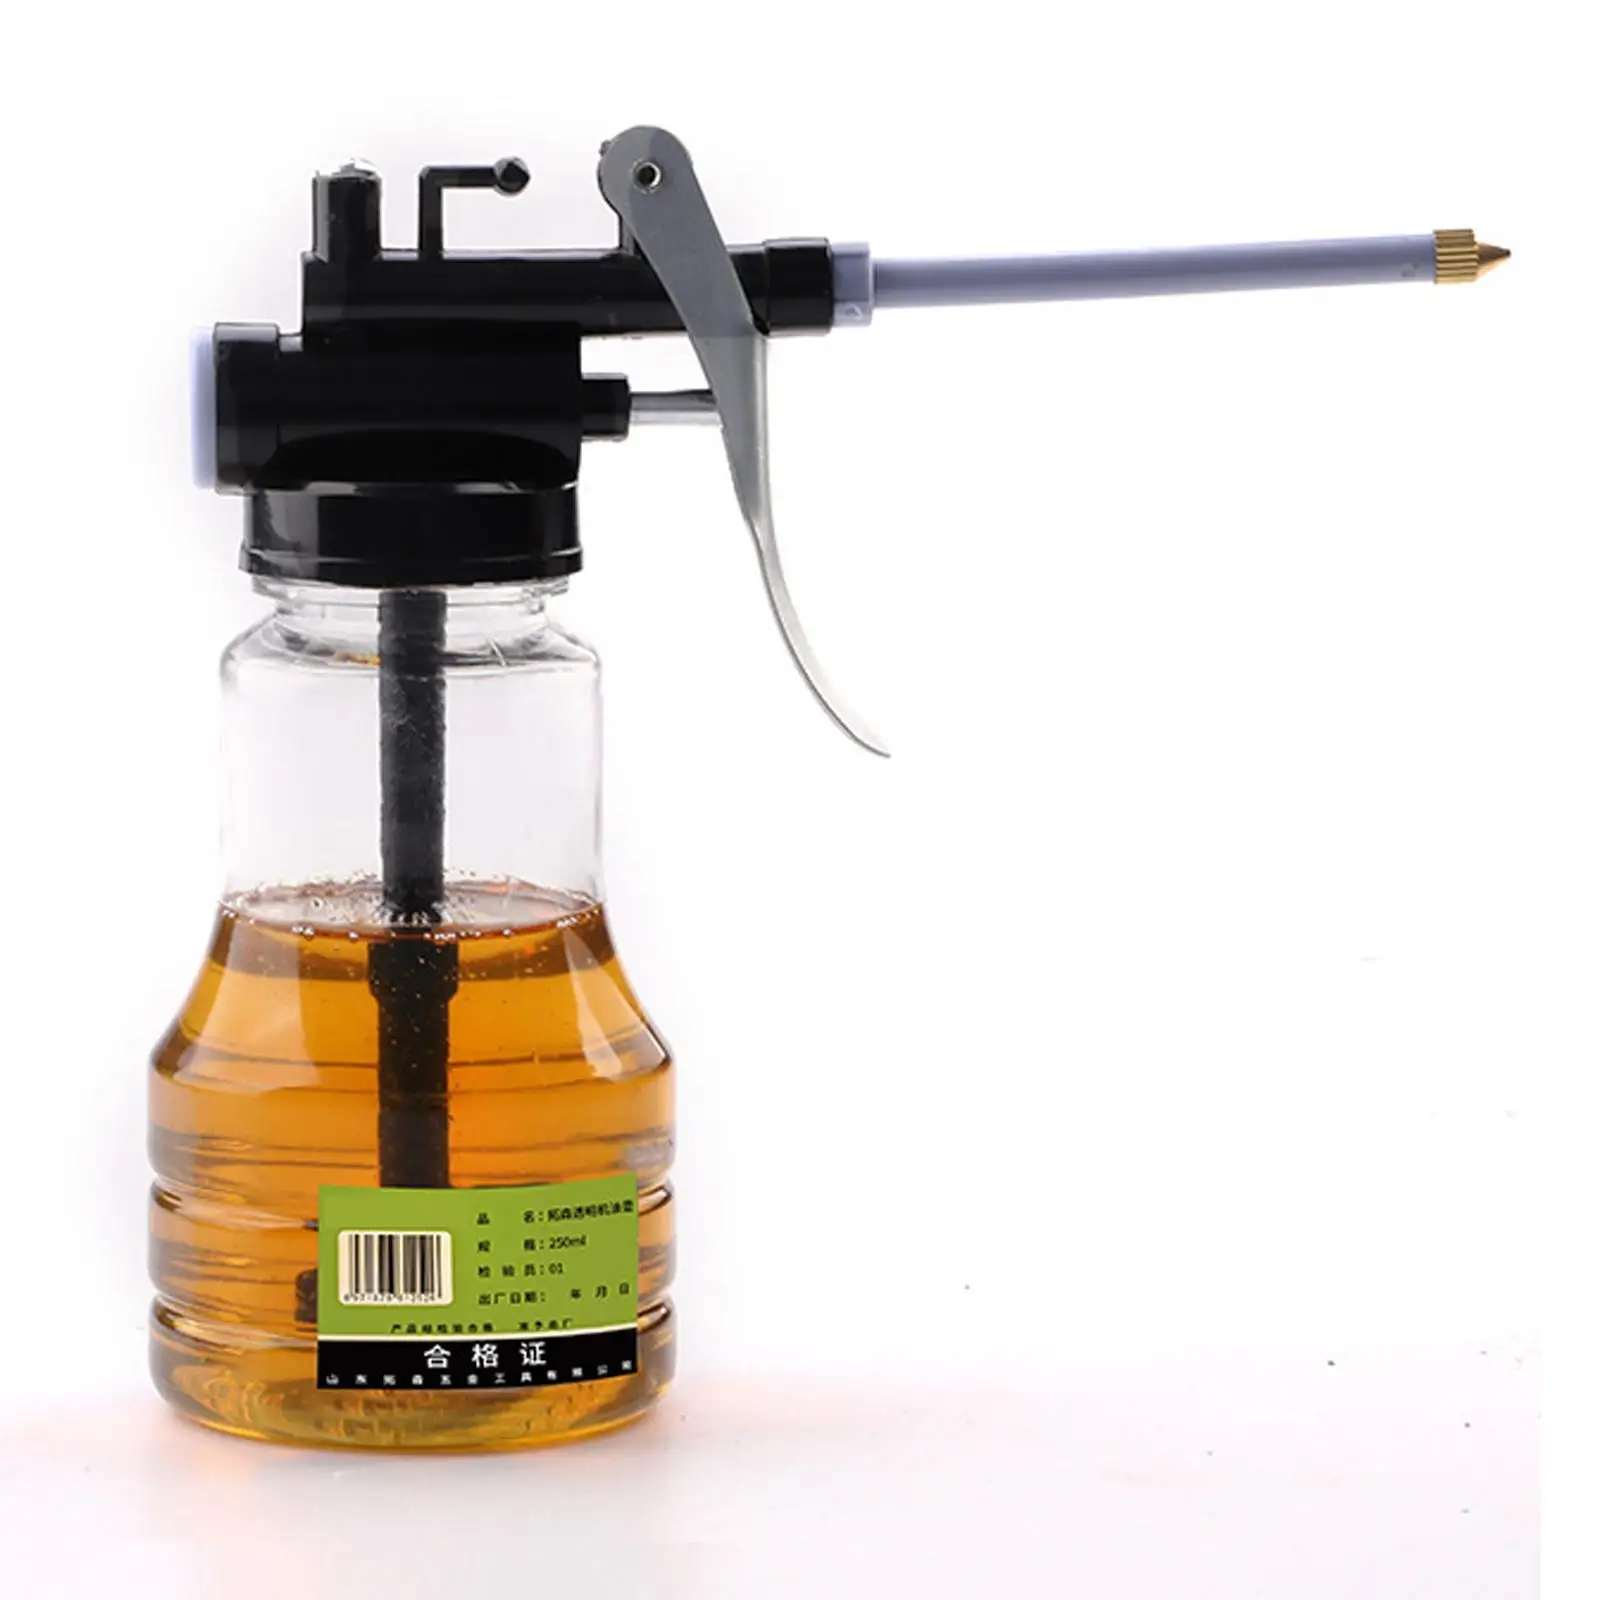 Lubrication Oil Can High Pressure Oiler Jug for Repair